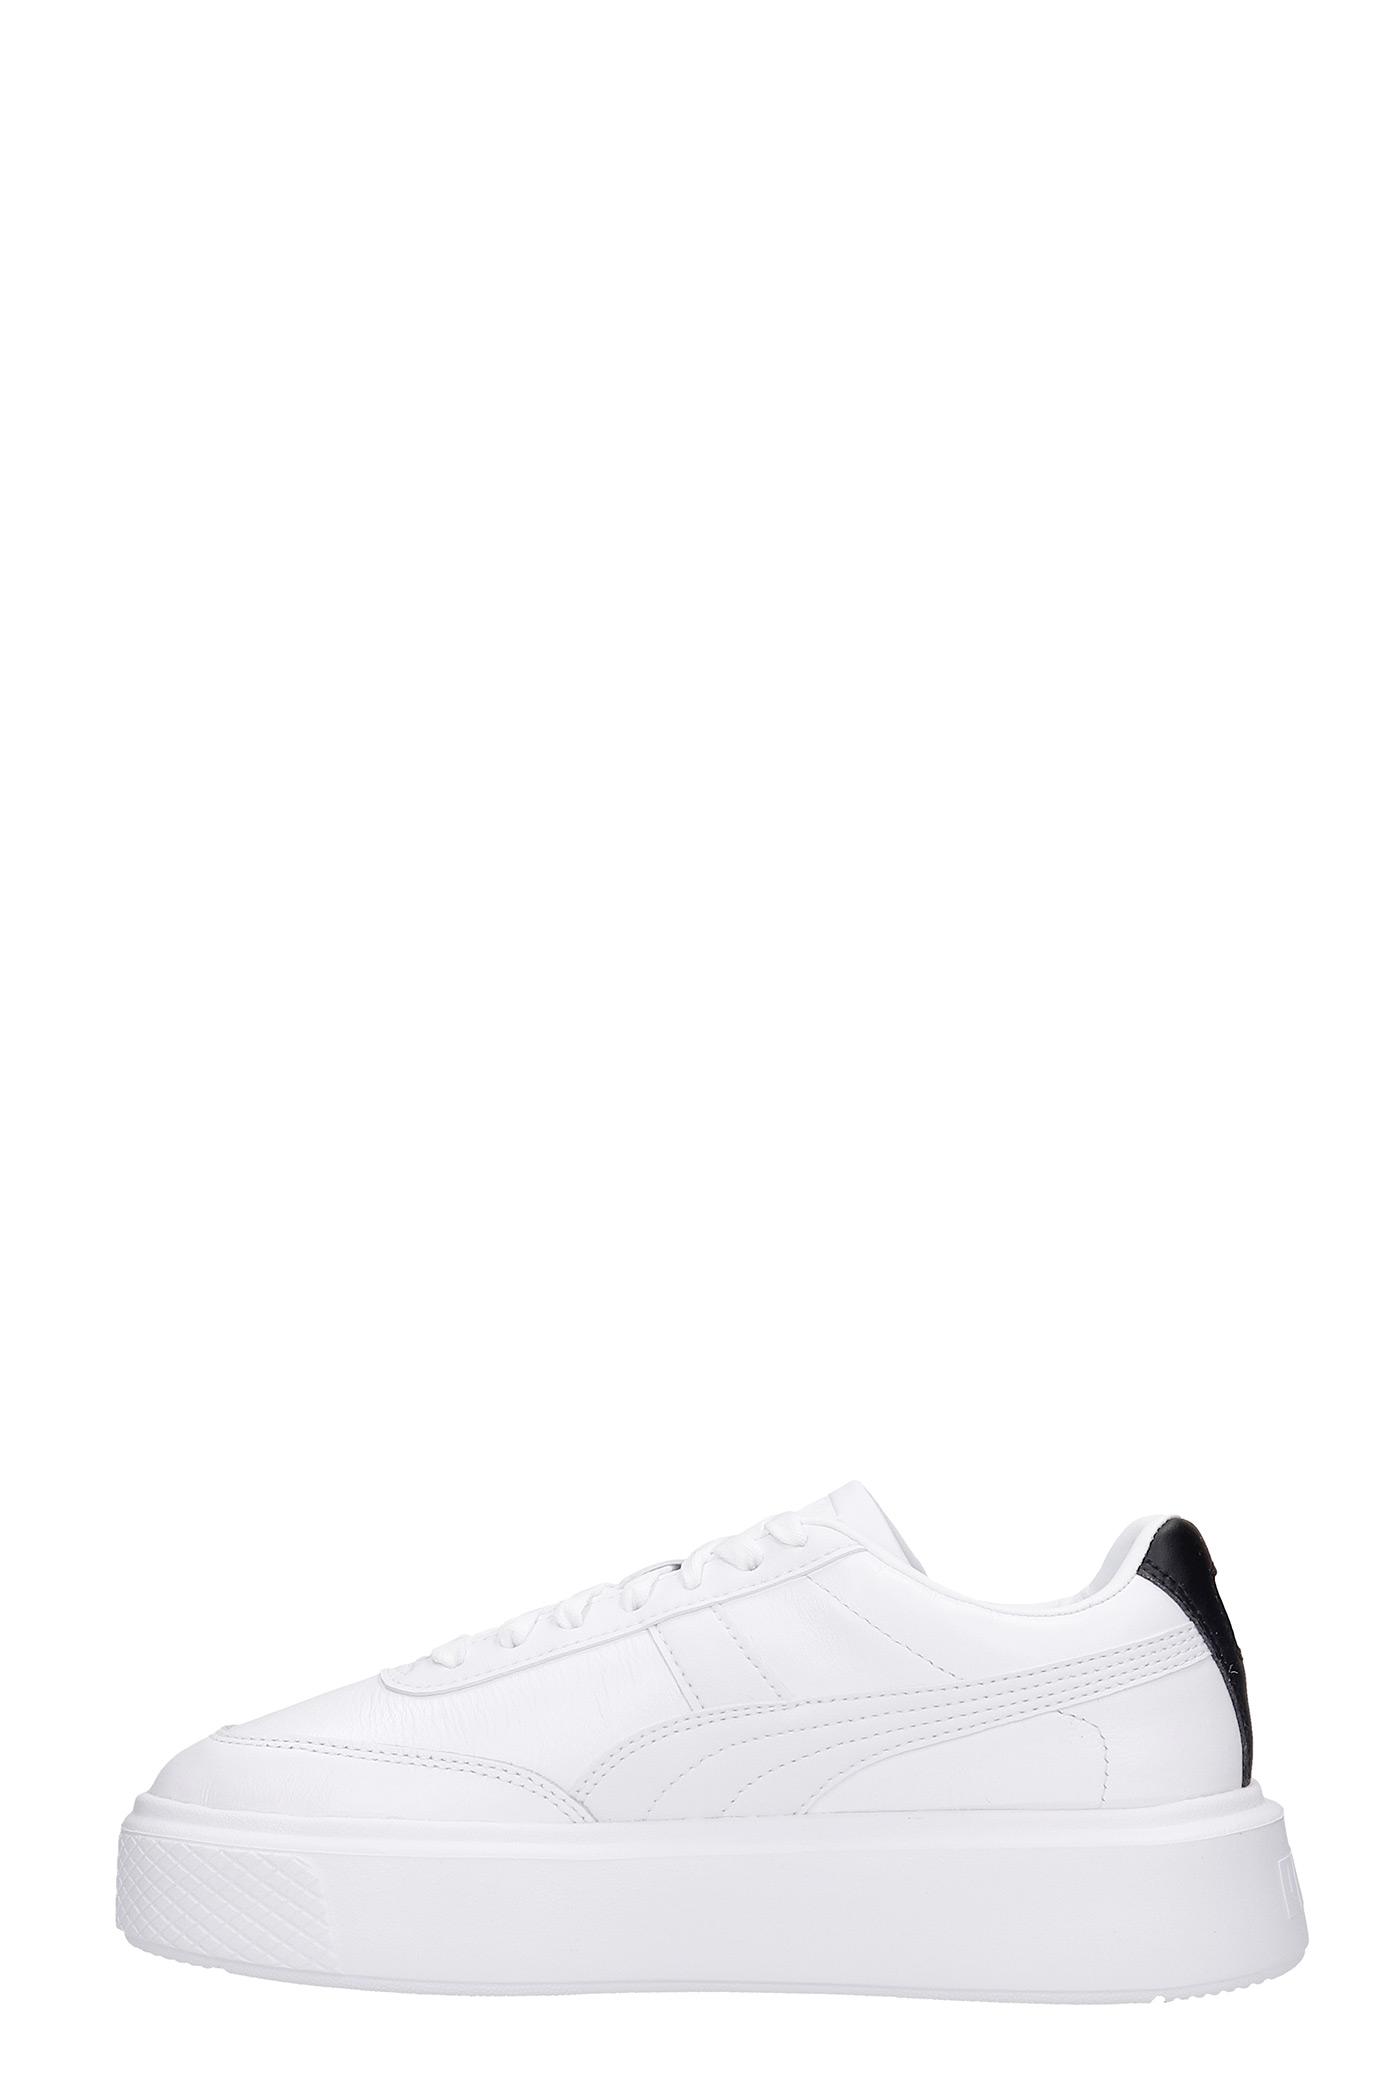 PUMA Oslo Maja Sneakers In White Leather - Lyst